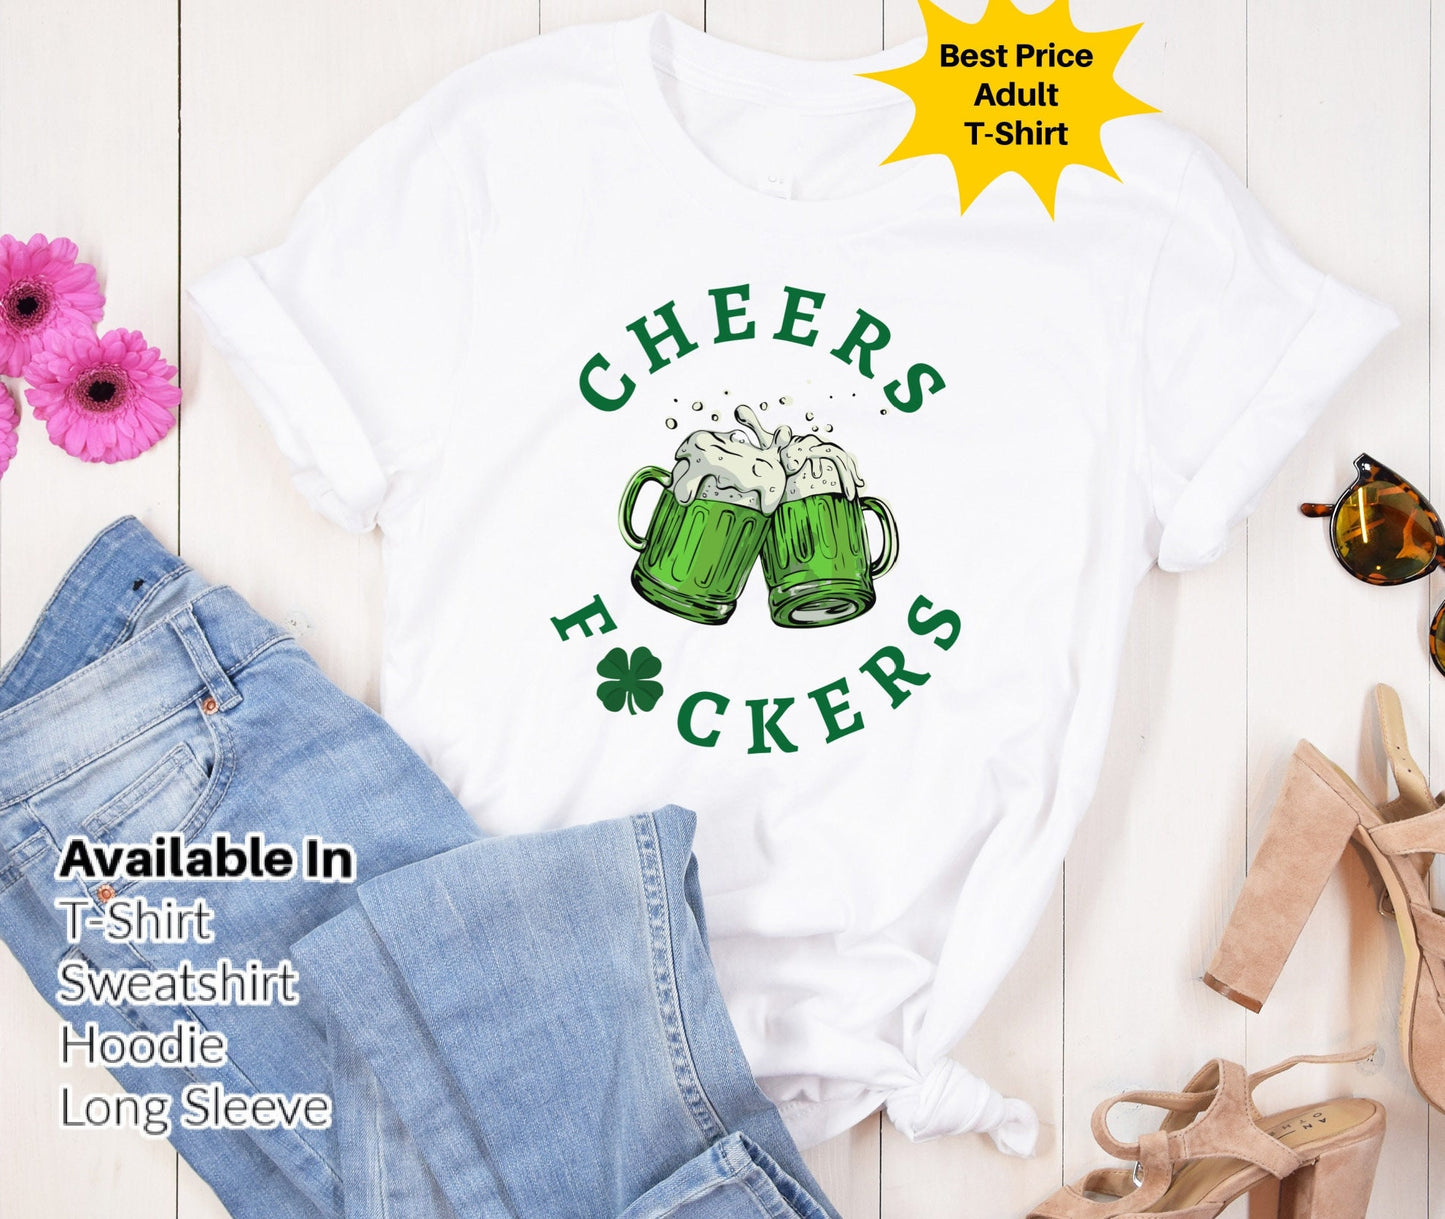 Cheers Fuckers shirt, St. Patrick's Day shirt, Lucky shirt, Irish Gifts,Gift for Patricks Day, Shamrock Tee, Gift For St. Patrick's Day